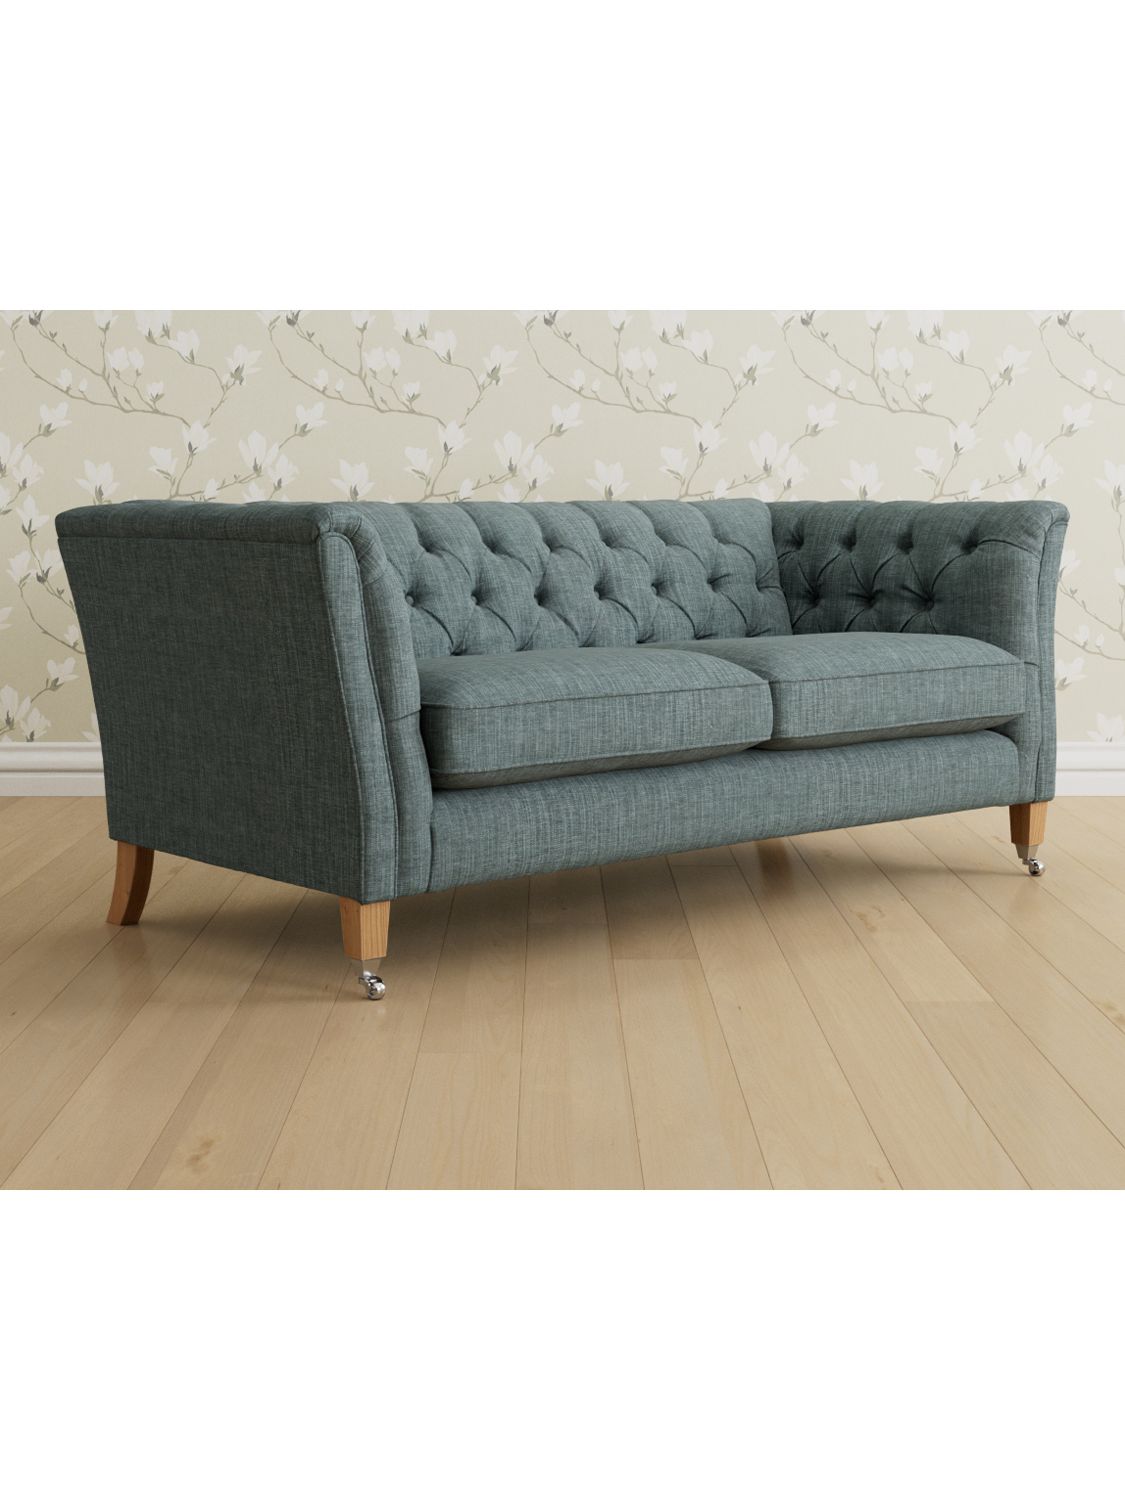 Chatsworth Range, Laura Ashley Chatsworth Medium 2 Seater Sofa, Oak Leg, Bainton Newport Blue